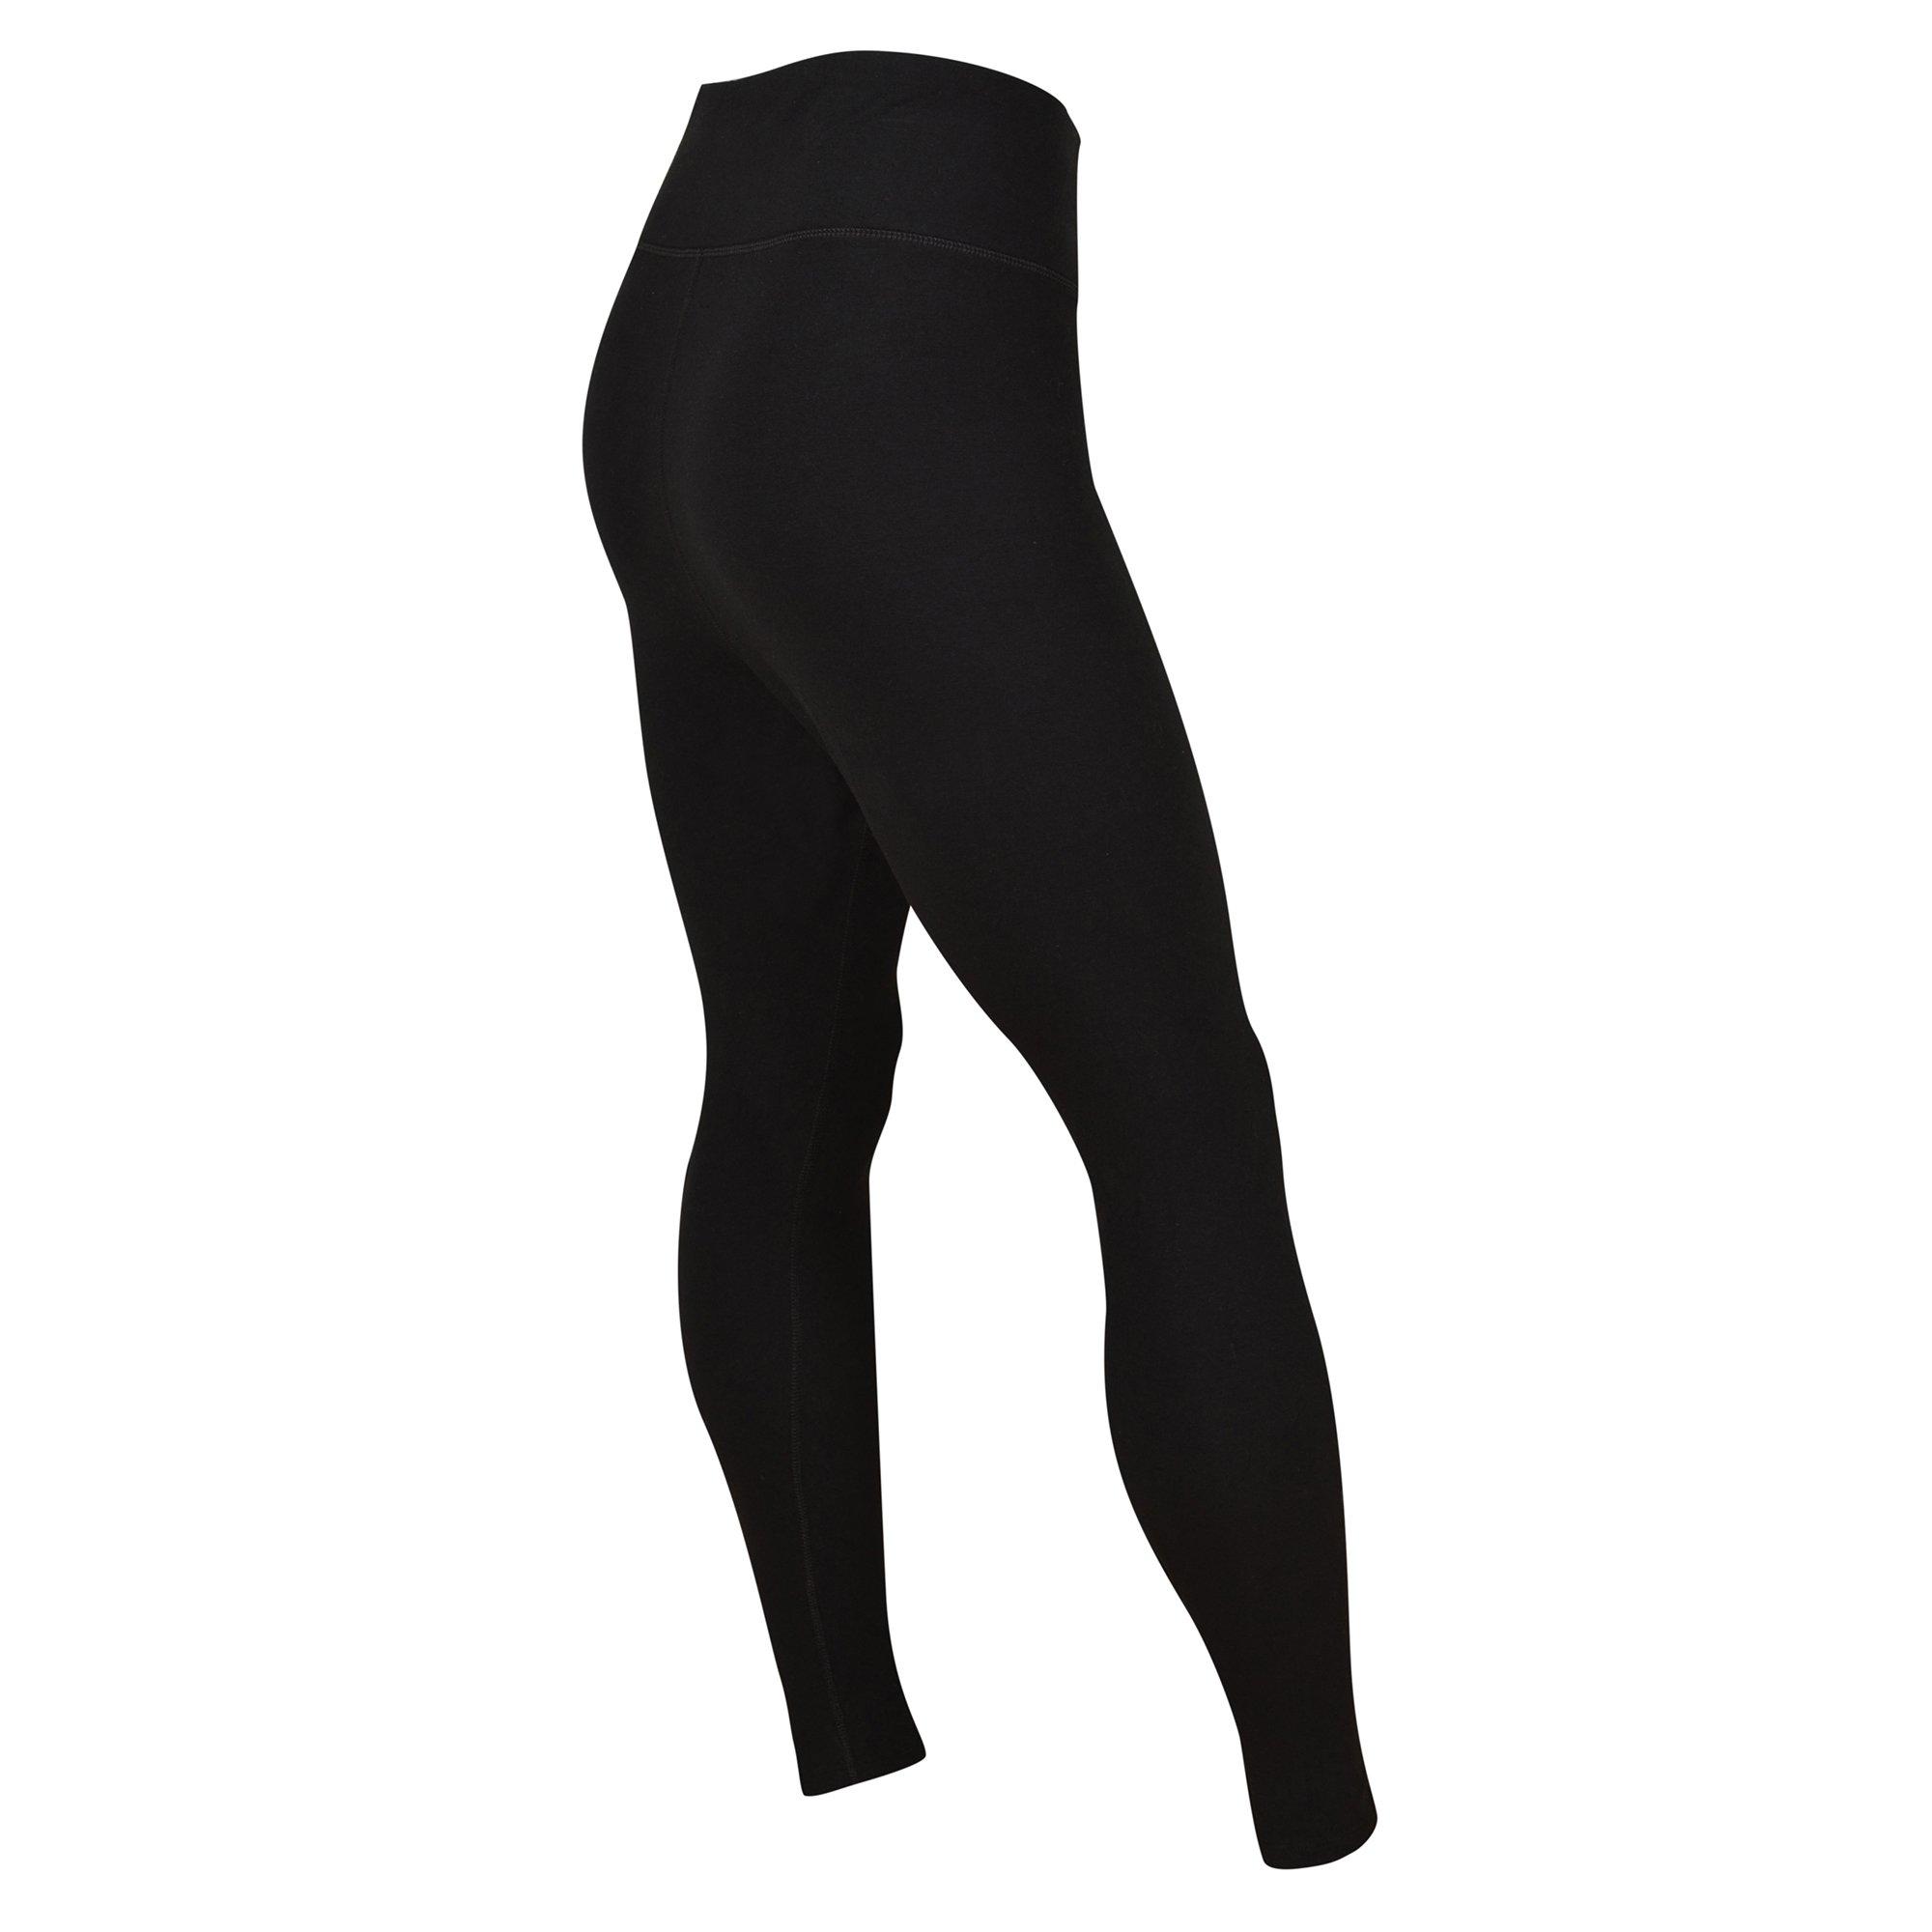 Hanes Curves Comfort Leggings Black 1X/2X Women's 